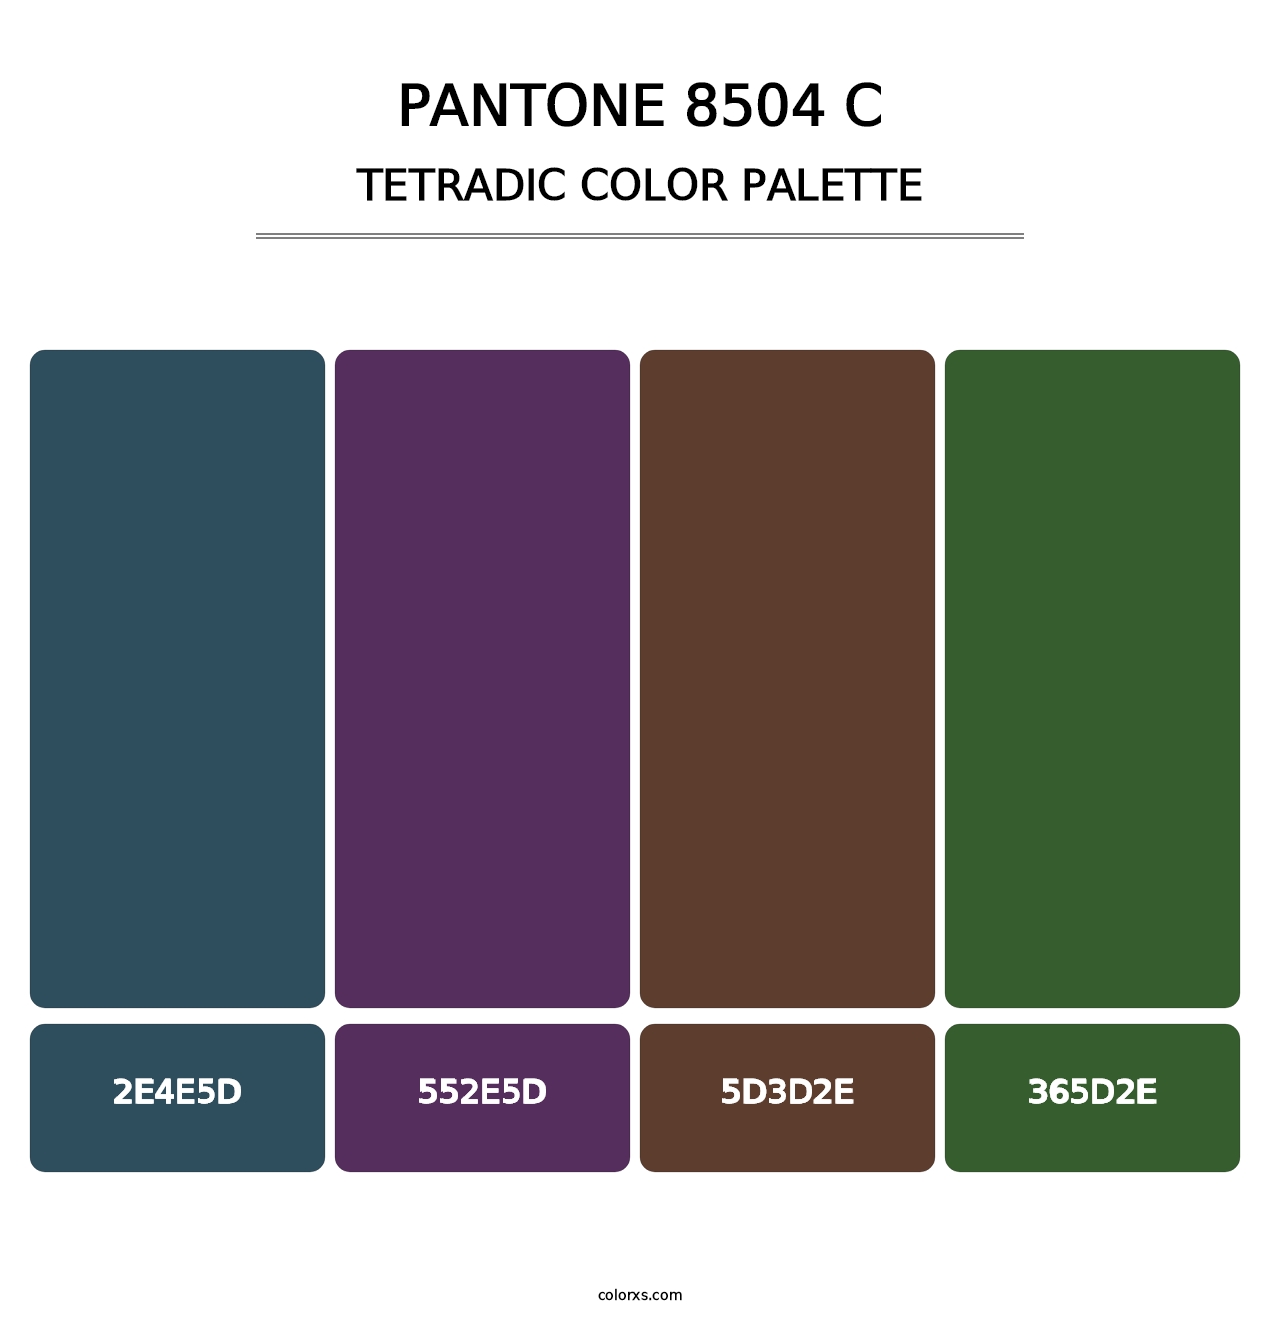 PANTONE 8504 C - Tetradic Color Palette